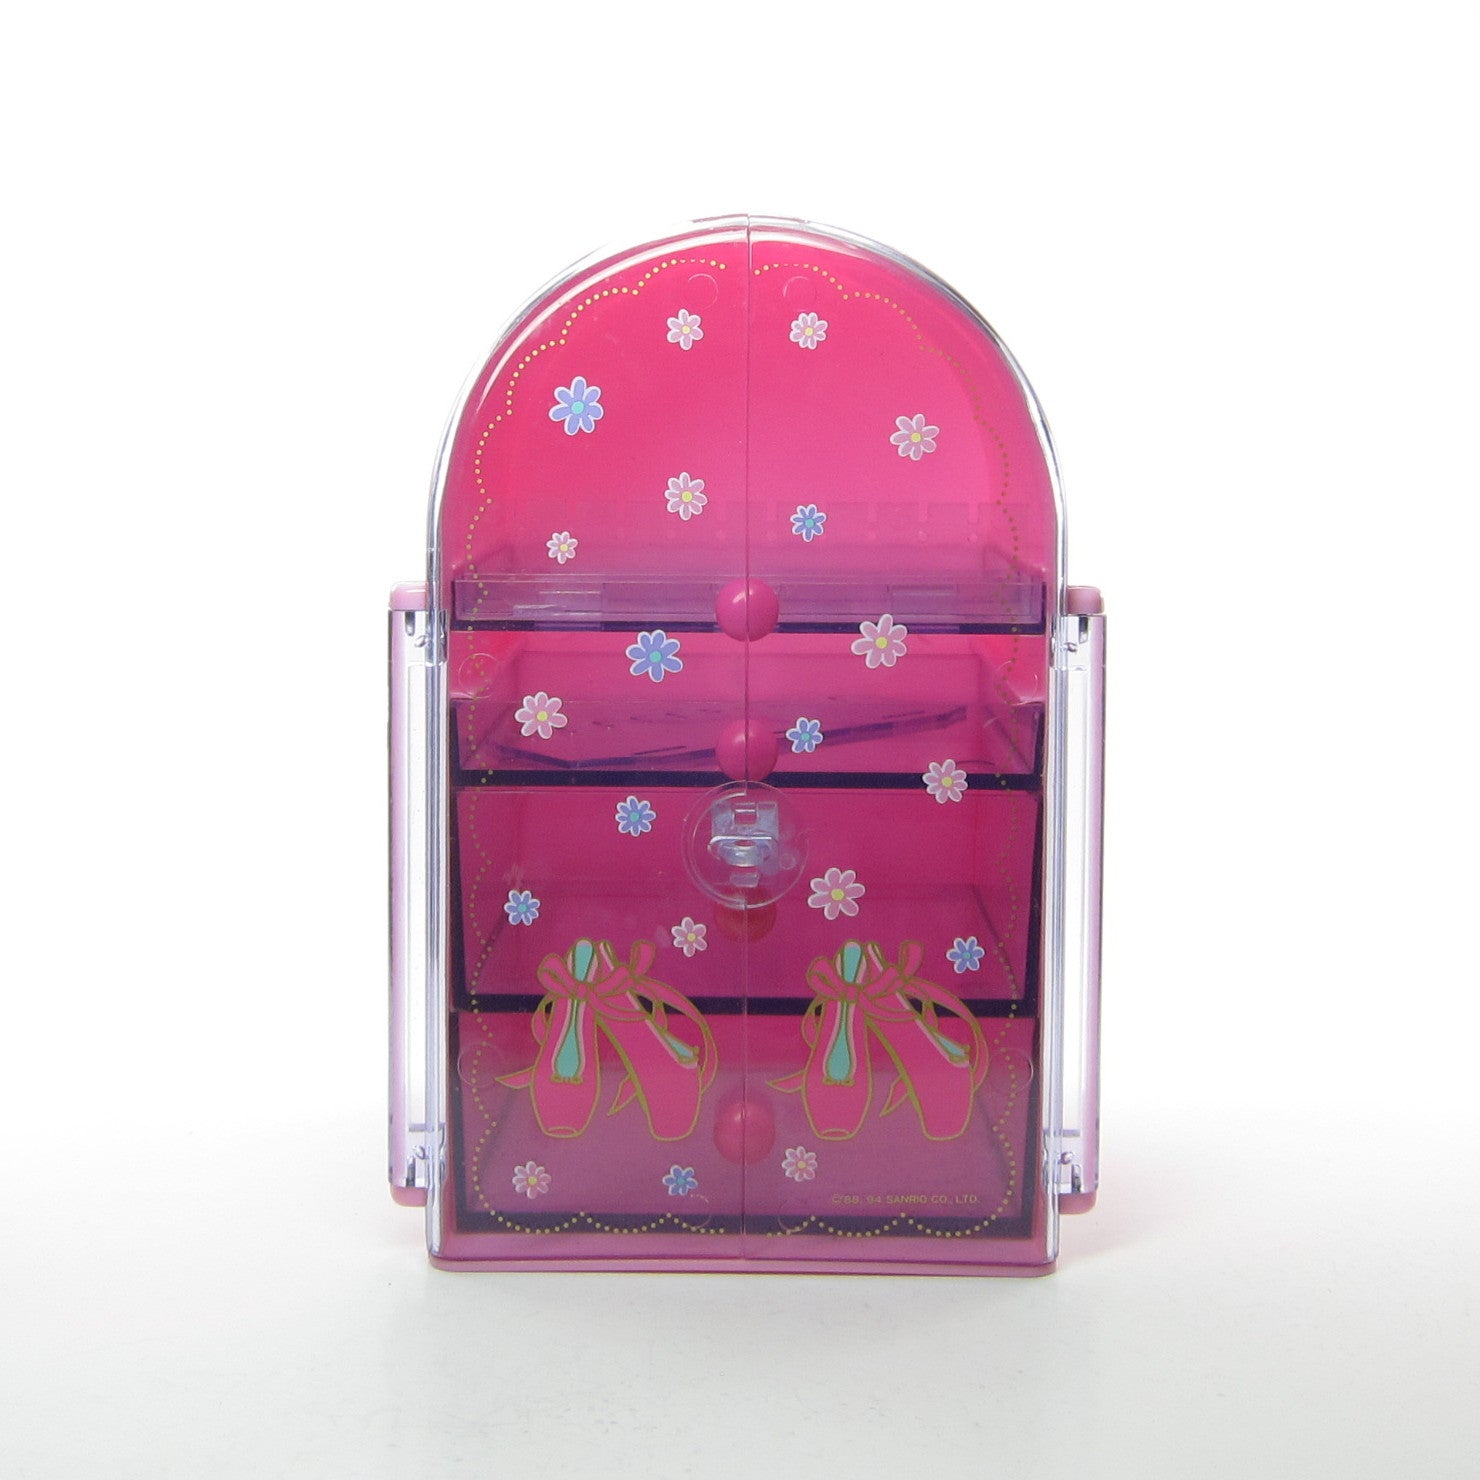 Kendall Small Jewelry Box Pink